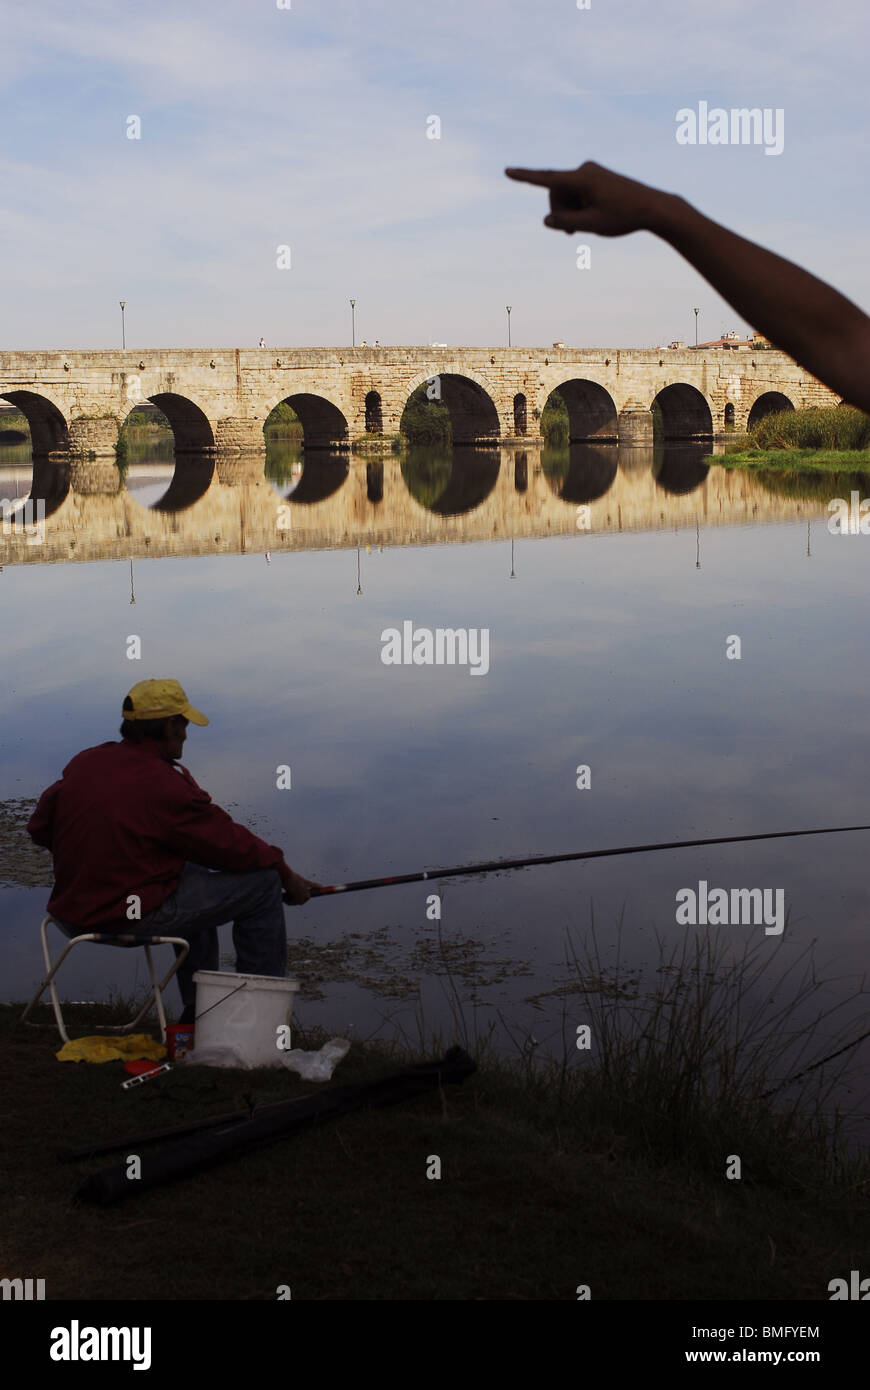 Cana de pescar hi-res stock photography and images - Alamy